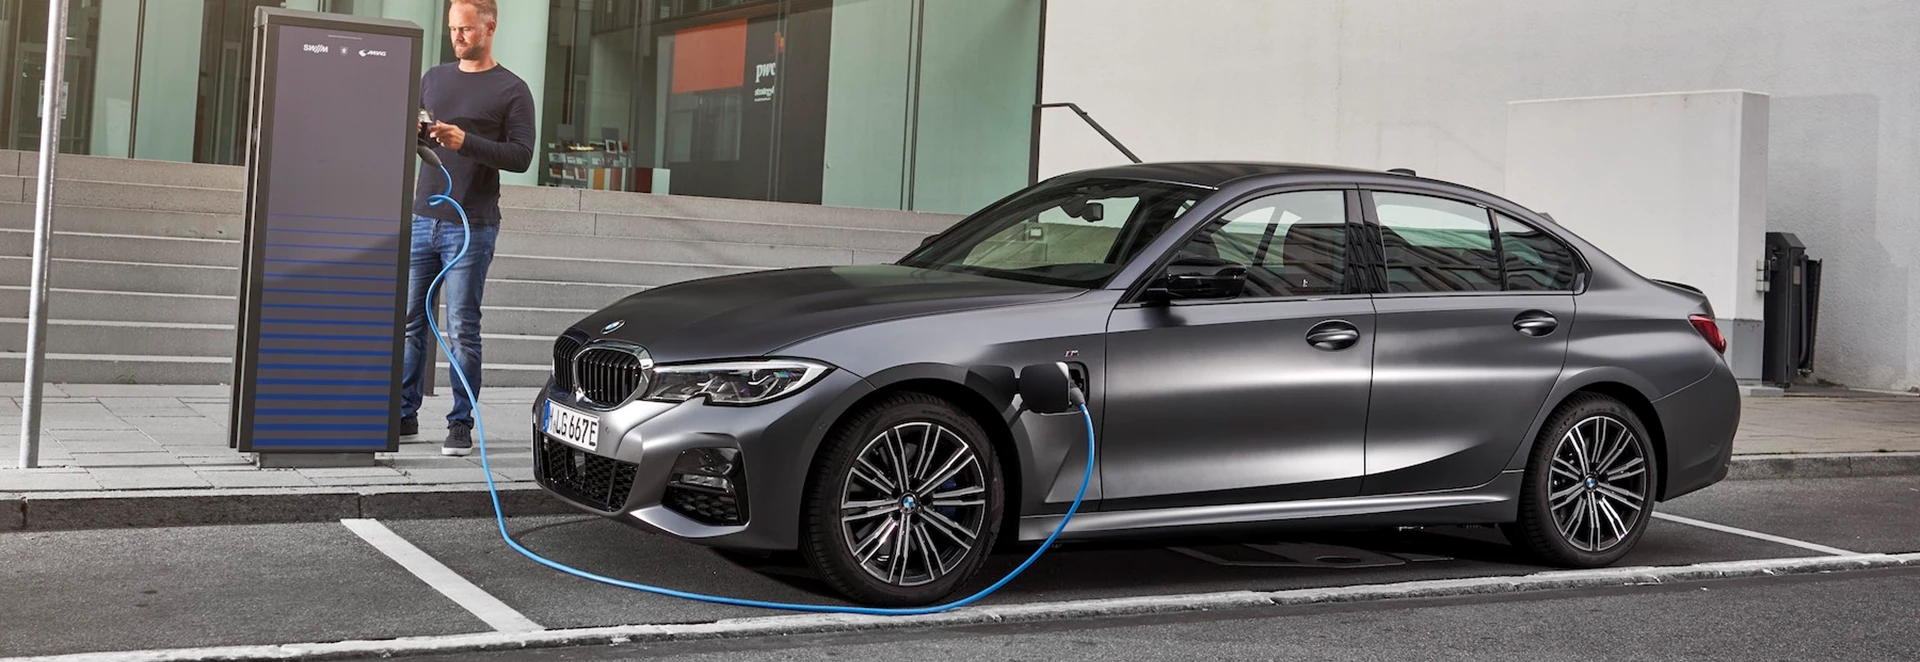 BMW 330e plug-in hybrid 2019 review